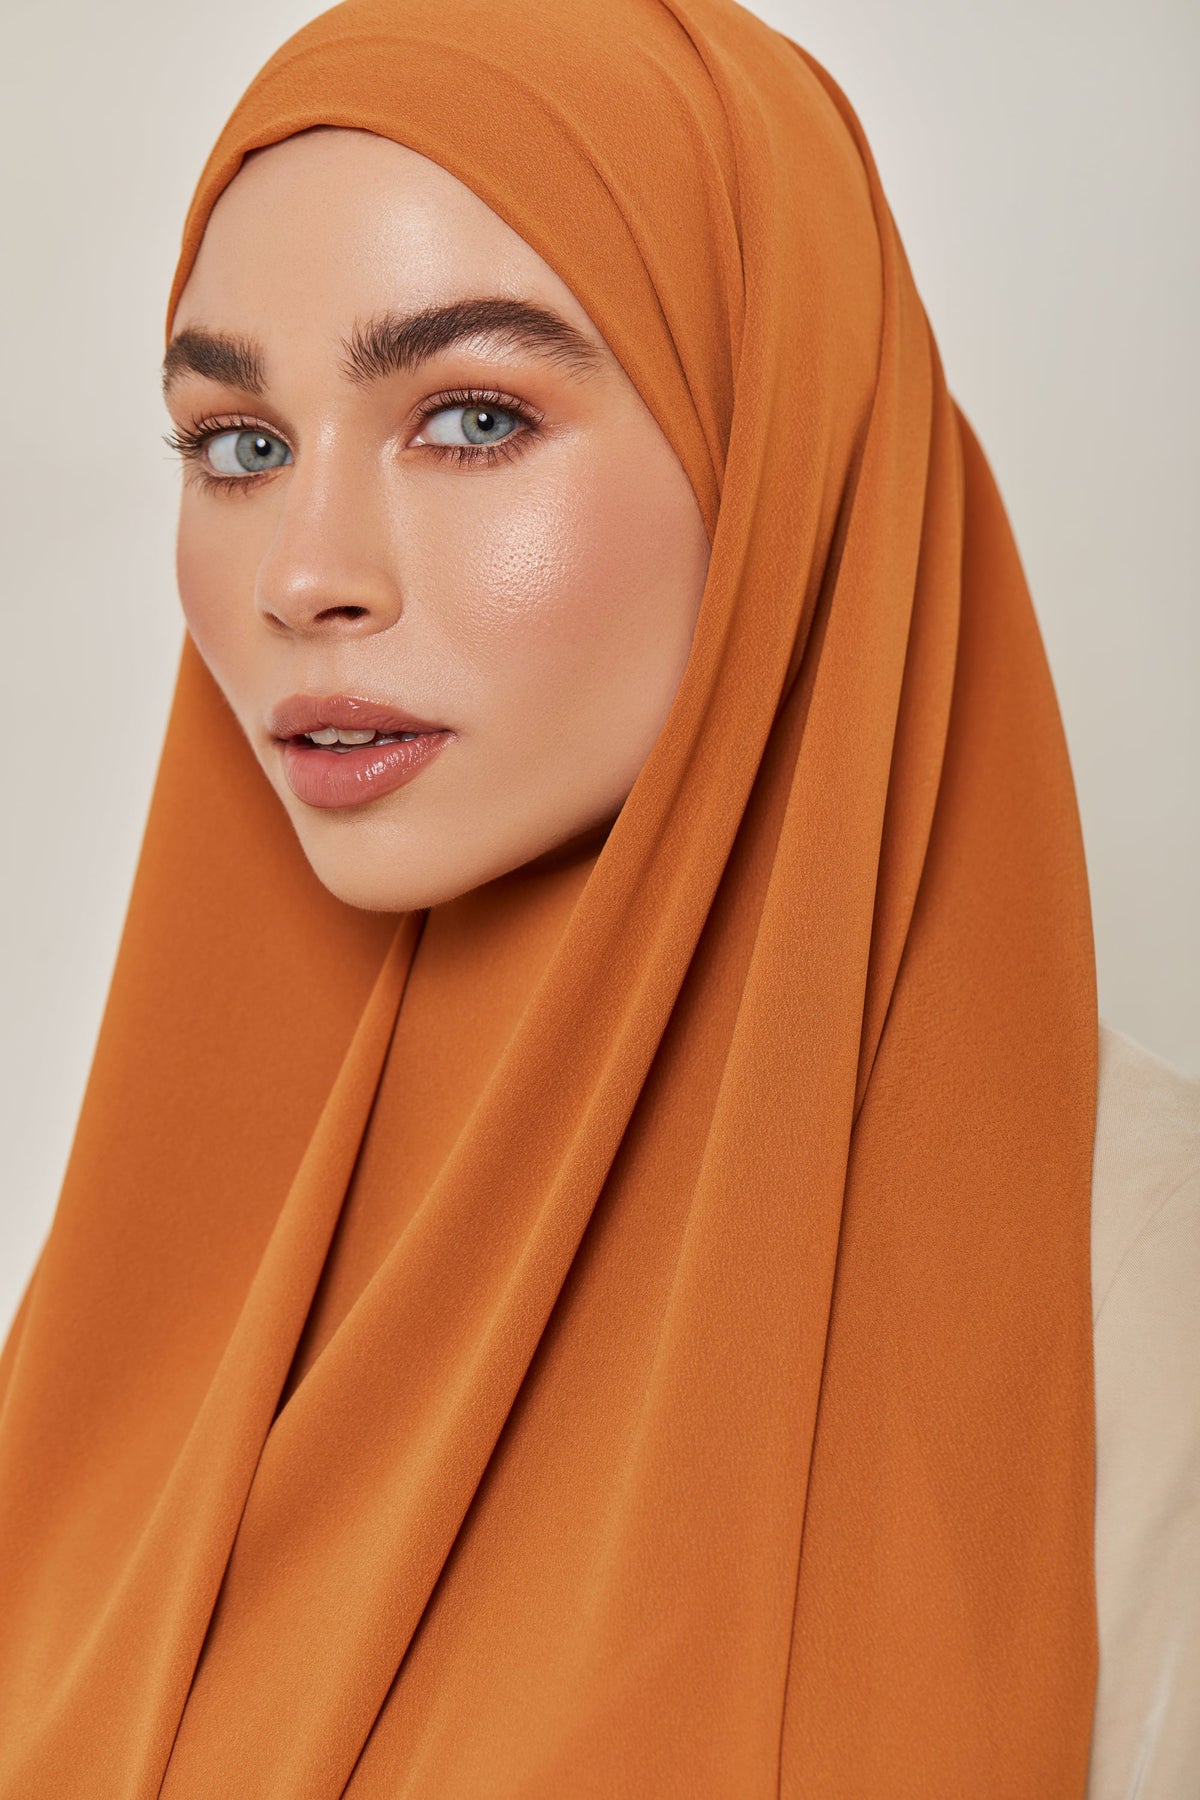 TEXTURE Everyday Chiffon Hijab - Cinnamon Stix Veiled Collection 